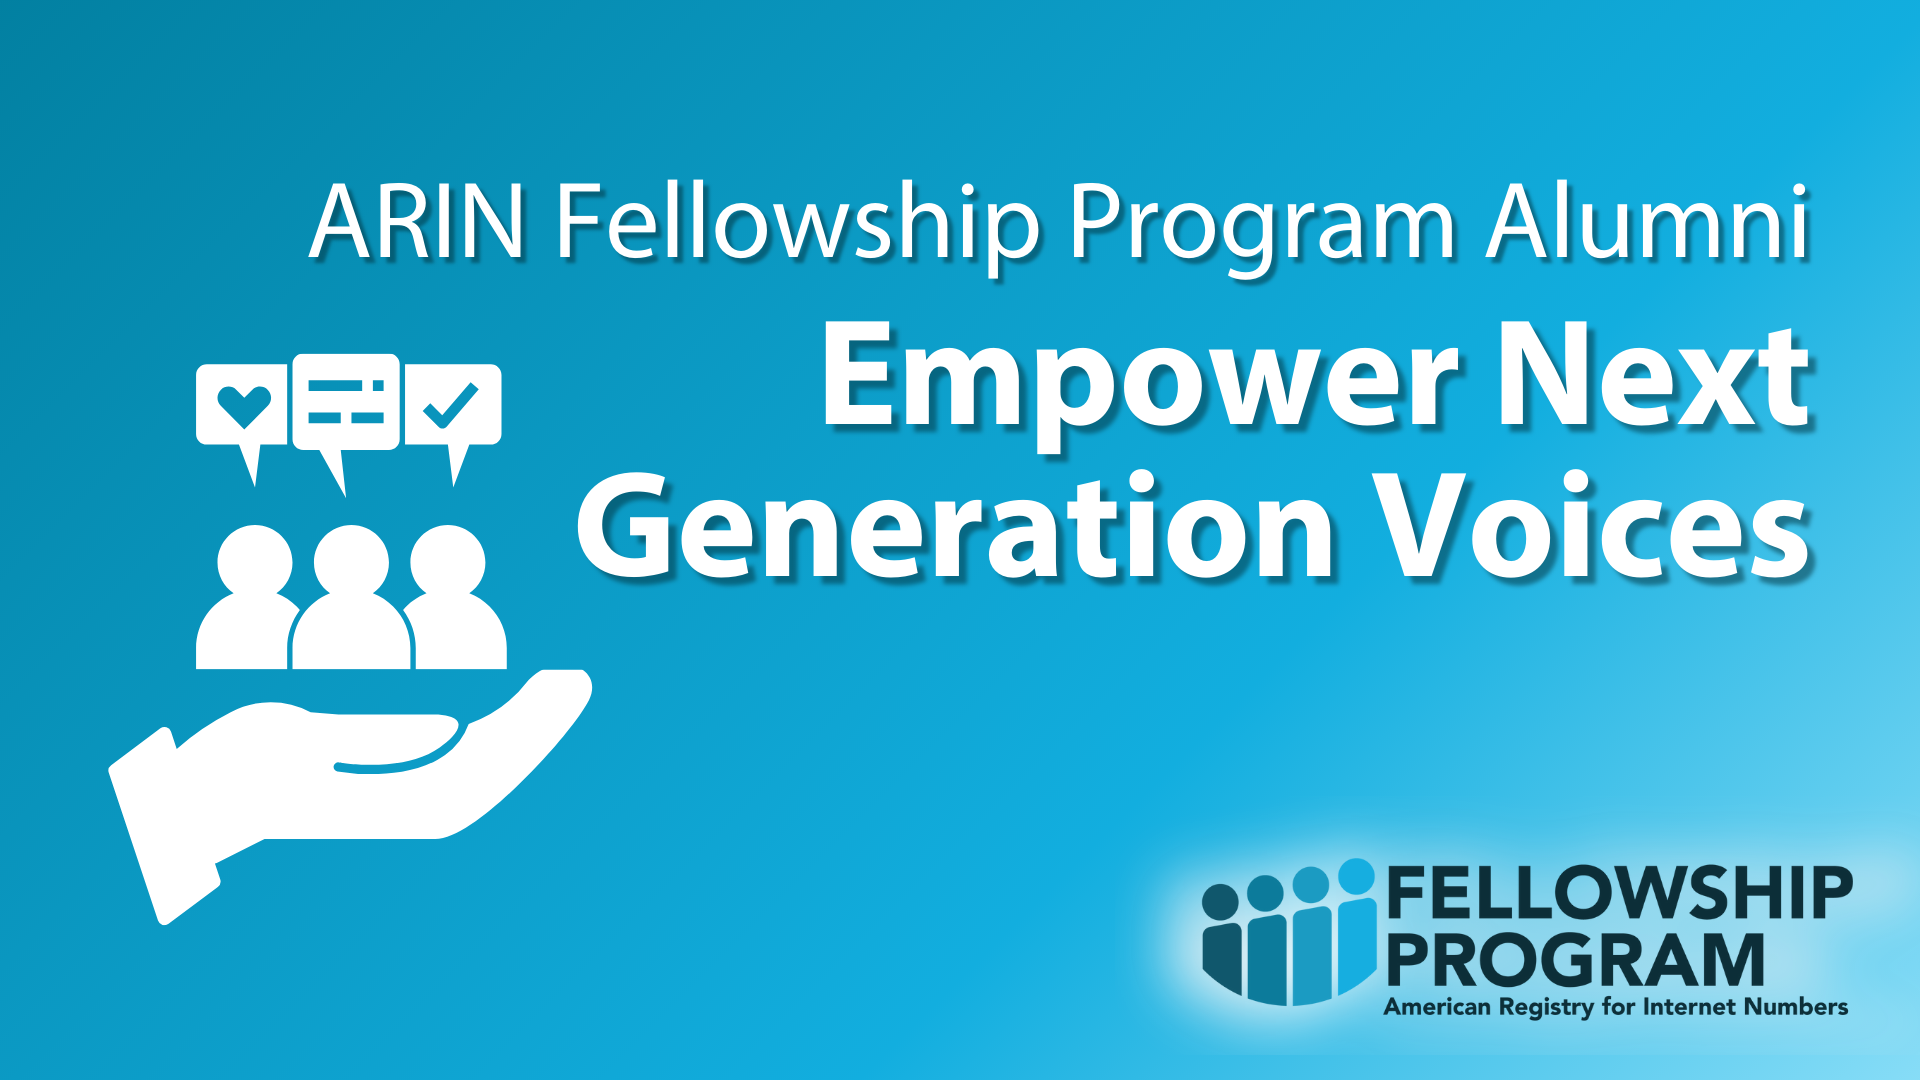 Read the blog ARIN Fellowship Program Alumni Empower Next Generation Voices